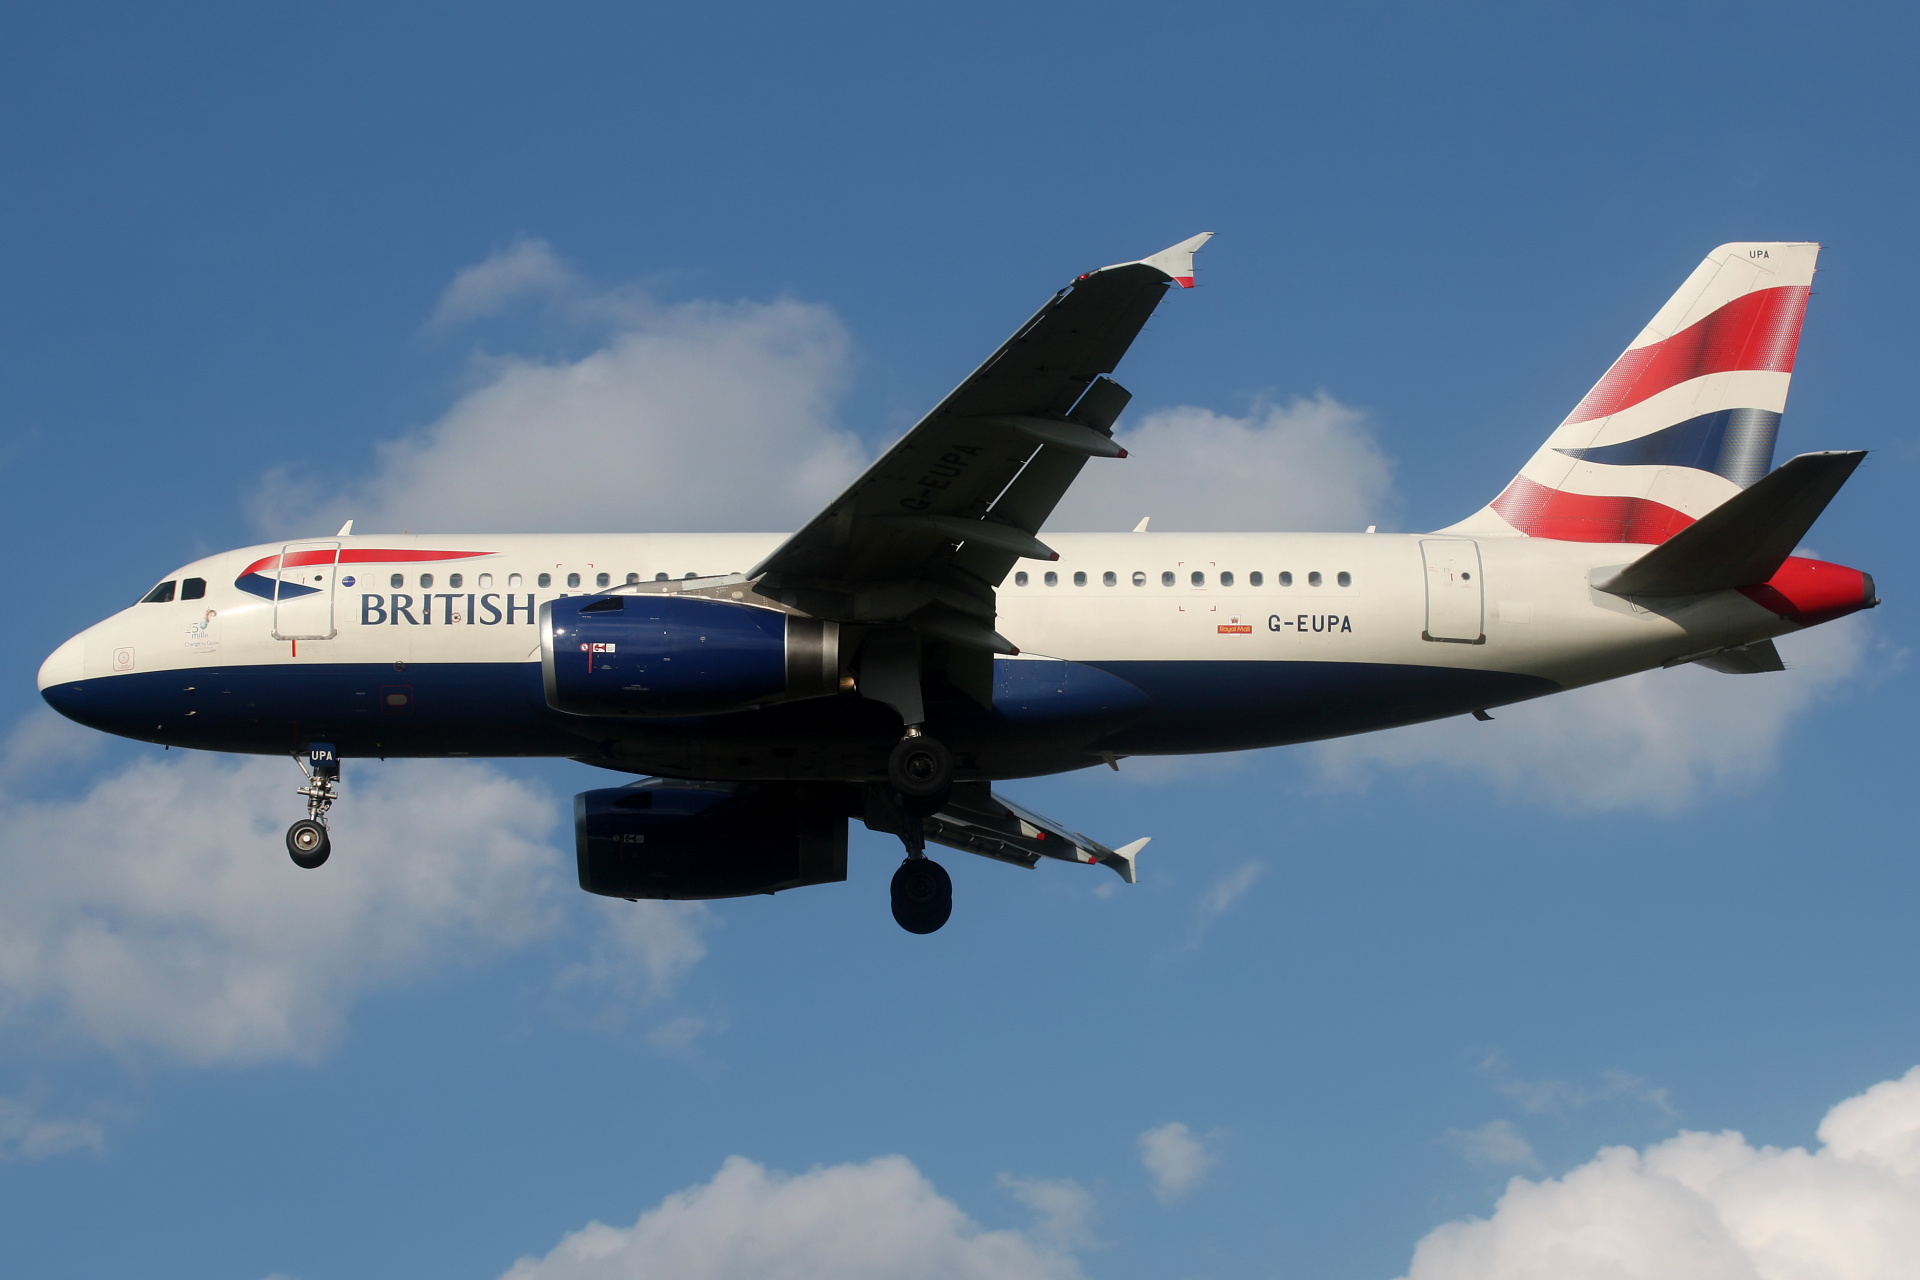 G-EUPA (25 million £. Change for Good sticker) (Aircraft » EPWA Spotting » Airbus A319-100 » British Airways)